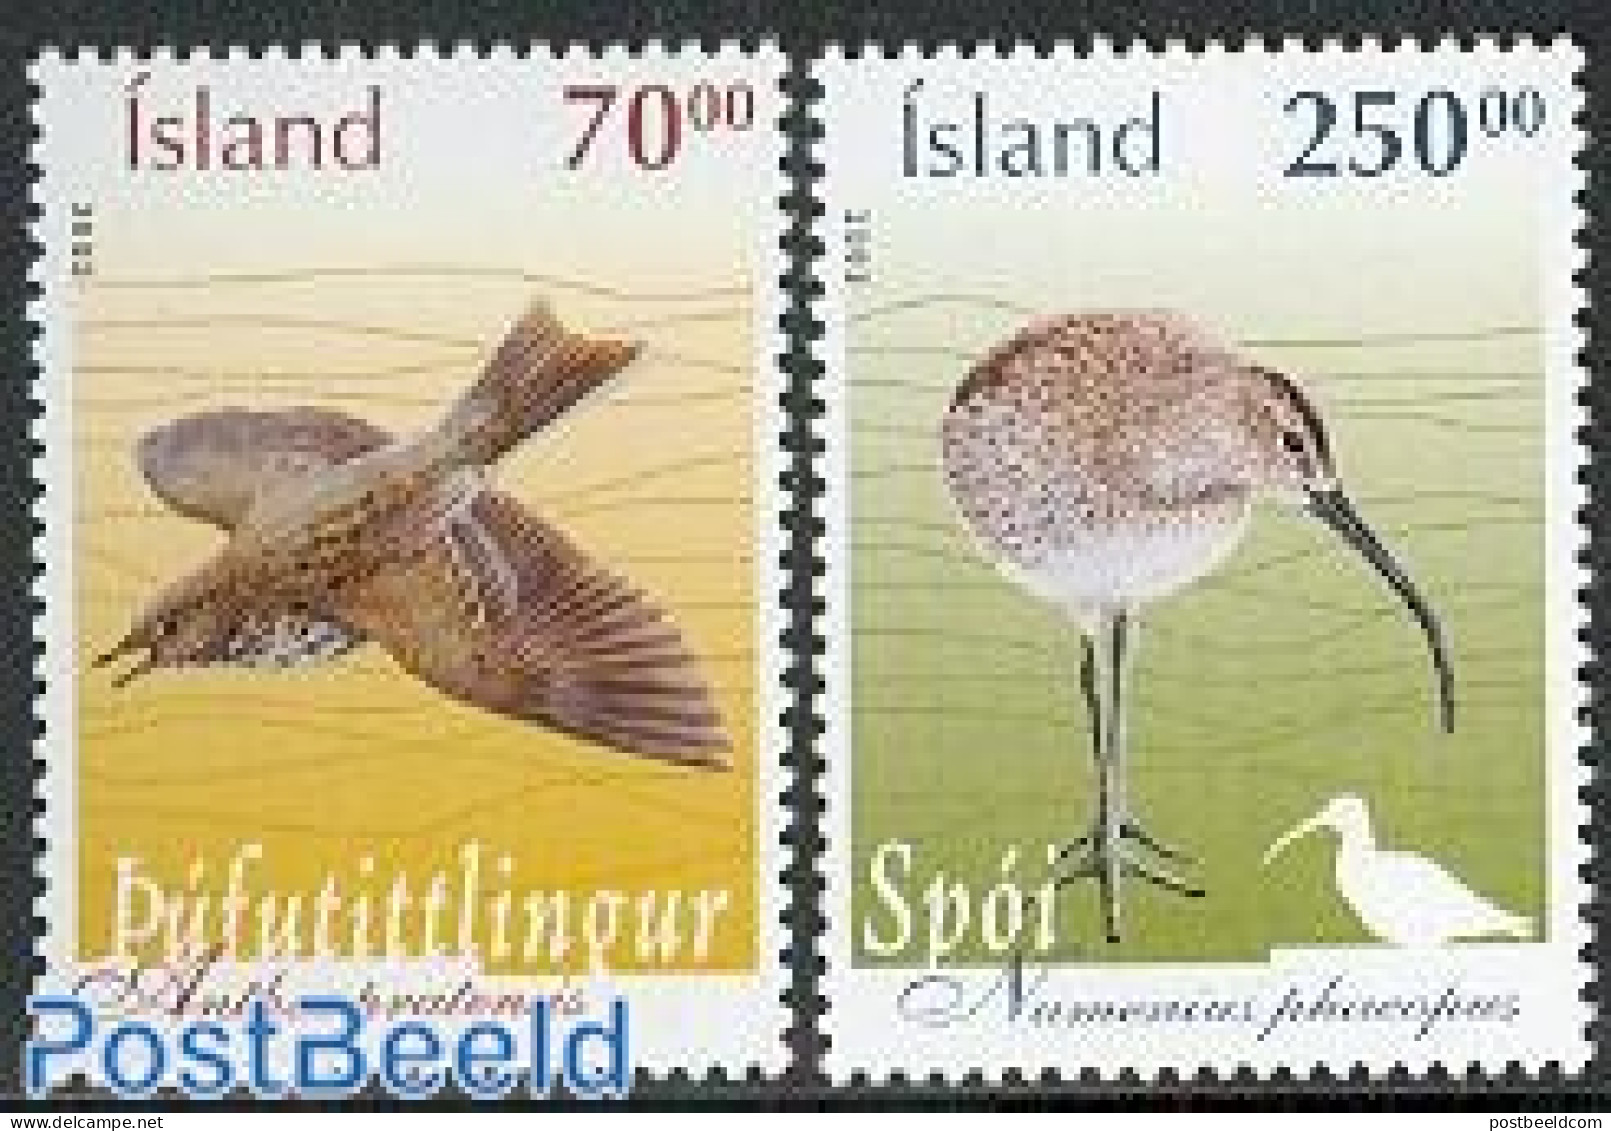 Iceland 2003 Birds 2v, Mint NH, Nature - Birds - Neufs